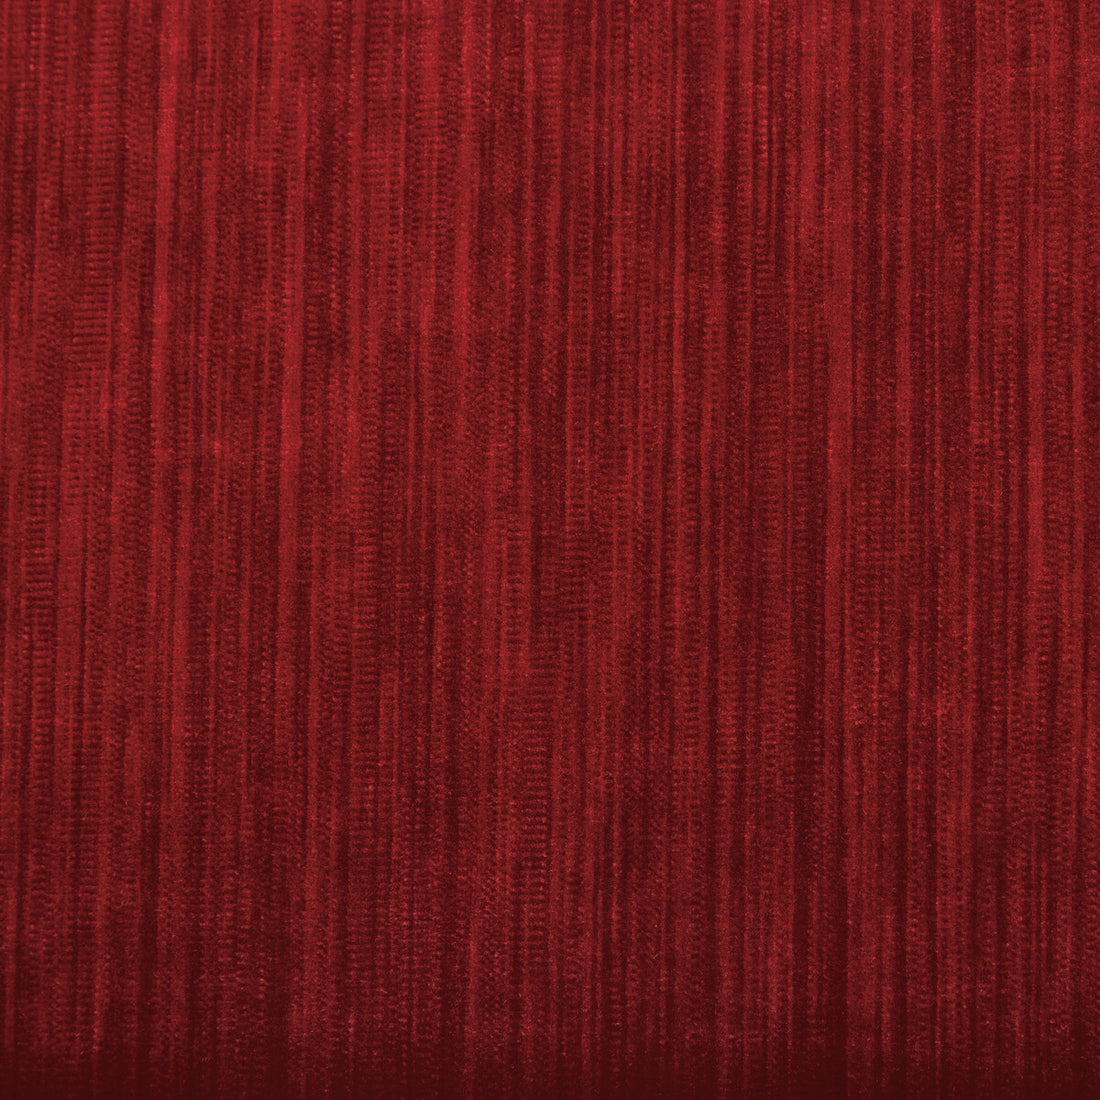 Barnwell Velvet fabric in ruby color - pattern 2020180.197.0 - by Lee Jofa in the Barnwell Velvet collection